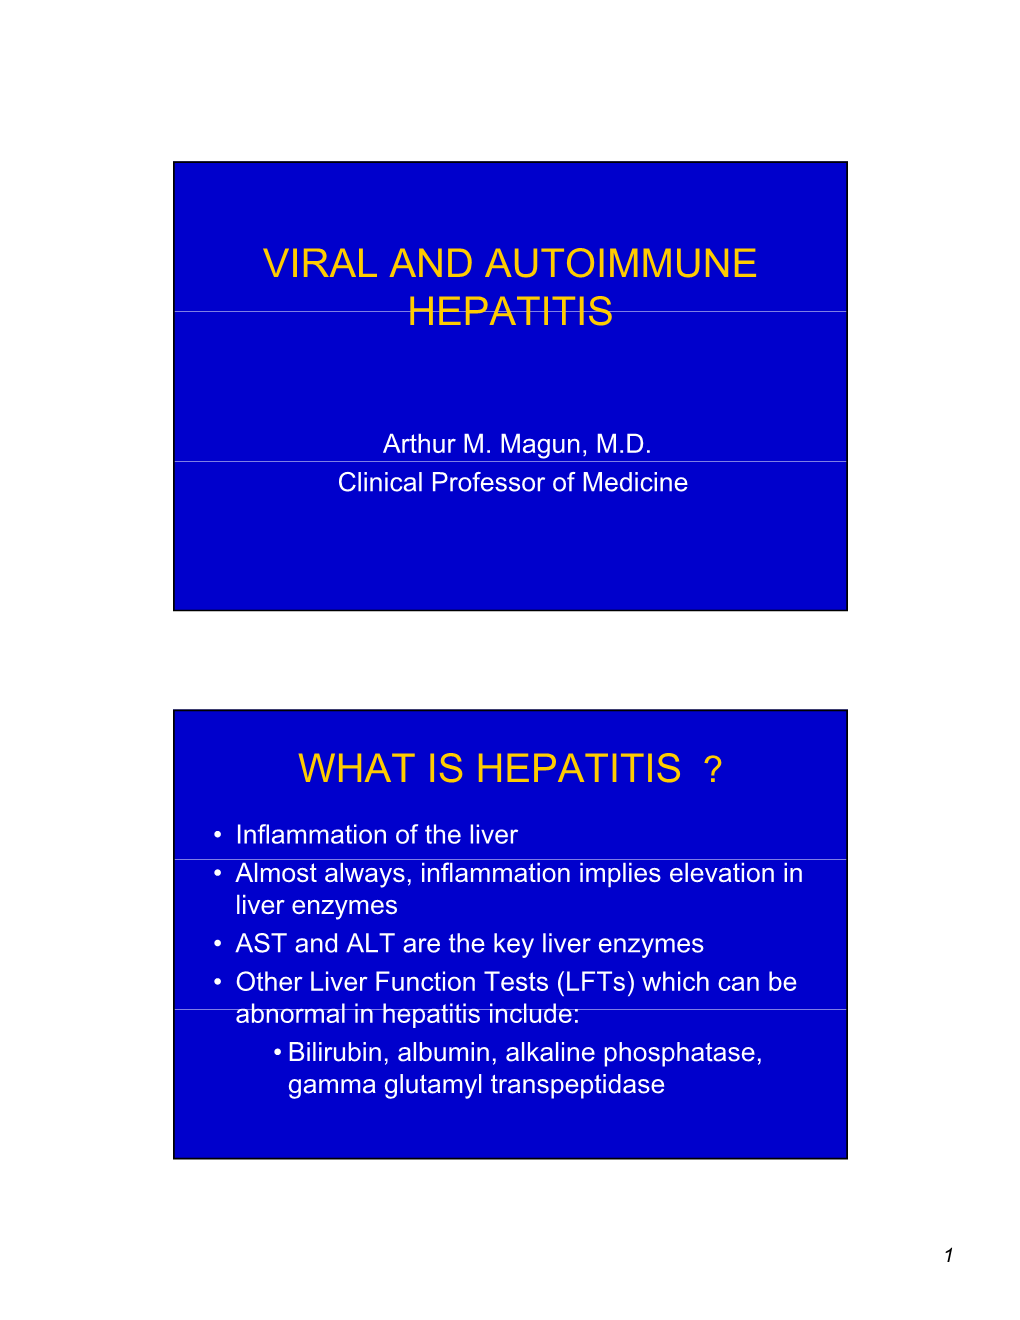 Hepatitis B Virus: Morphology and Characteristics Hepatitis B Virus